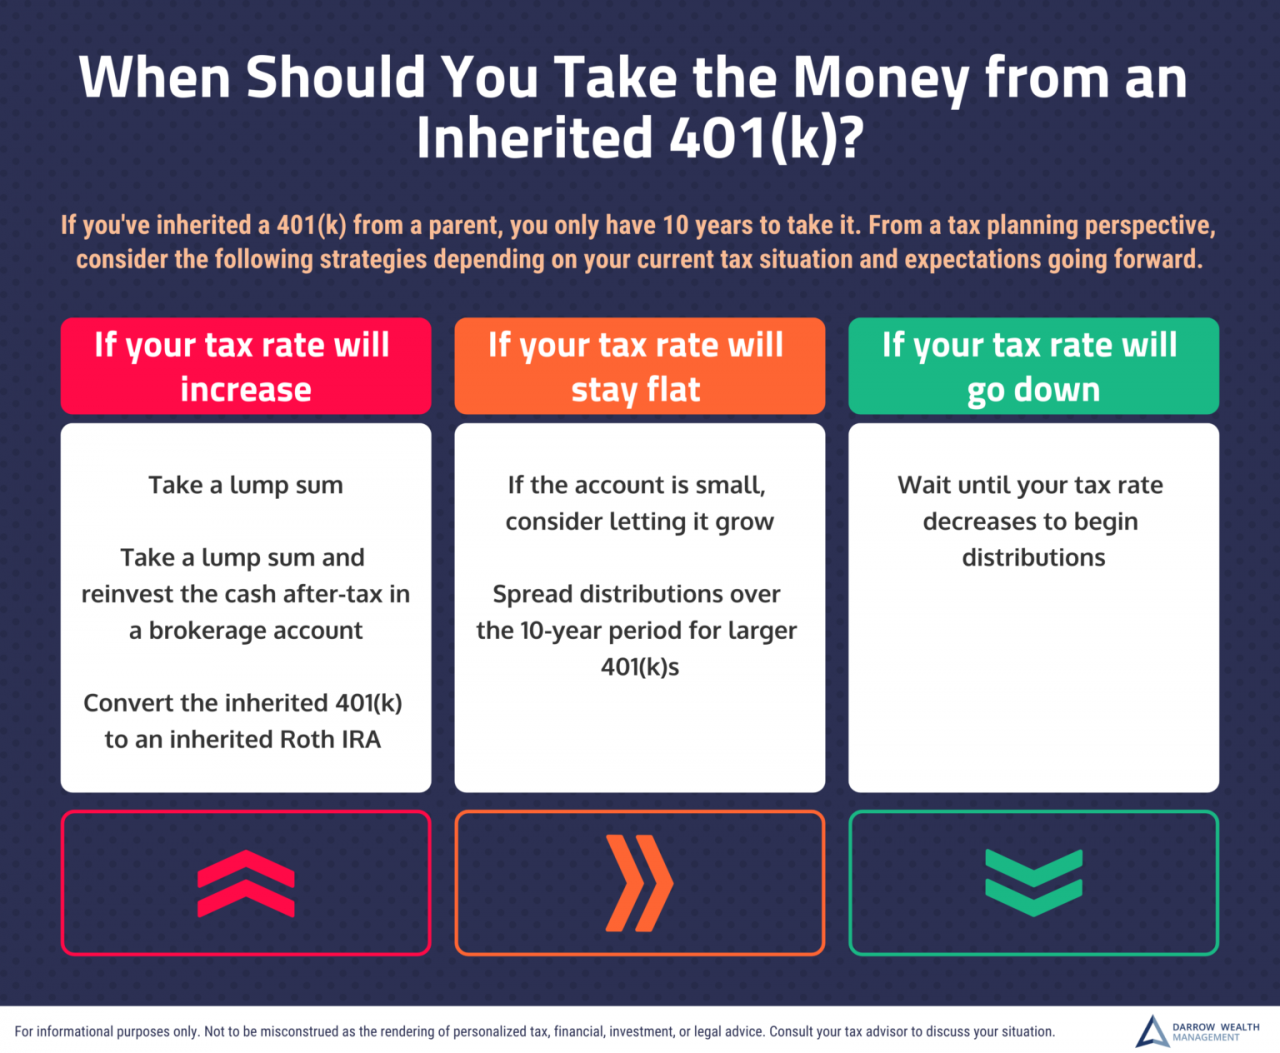 Do you pay taxes on an inherited 401k